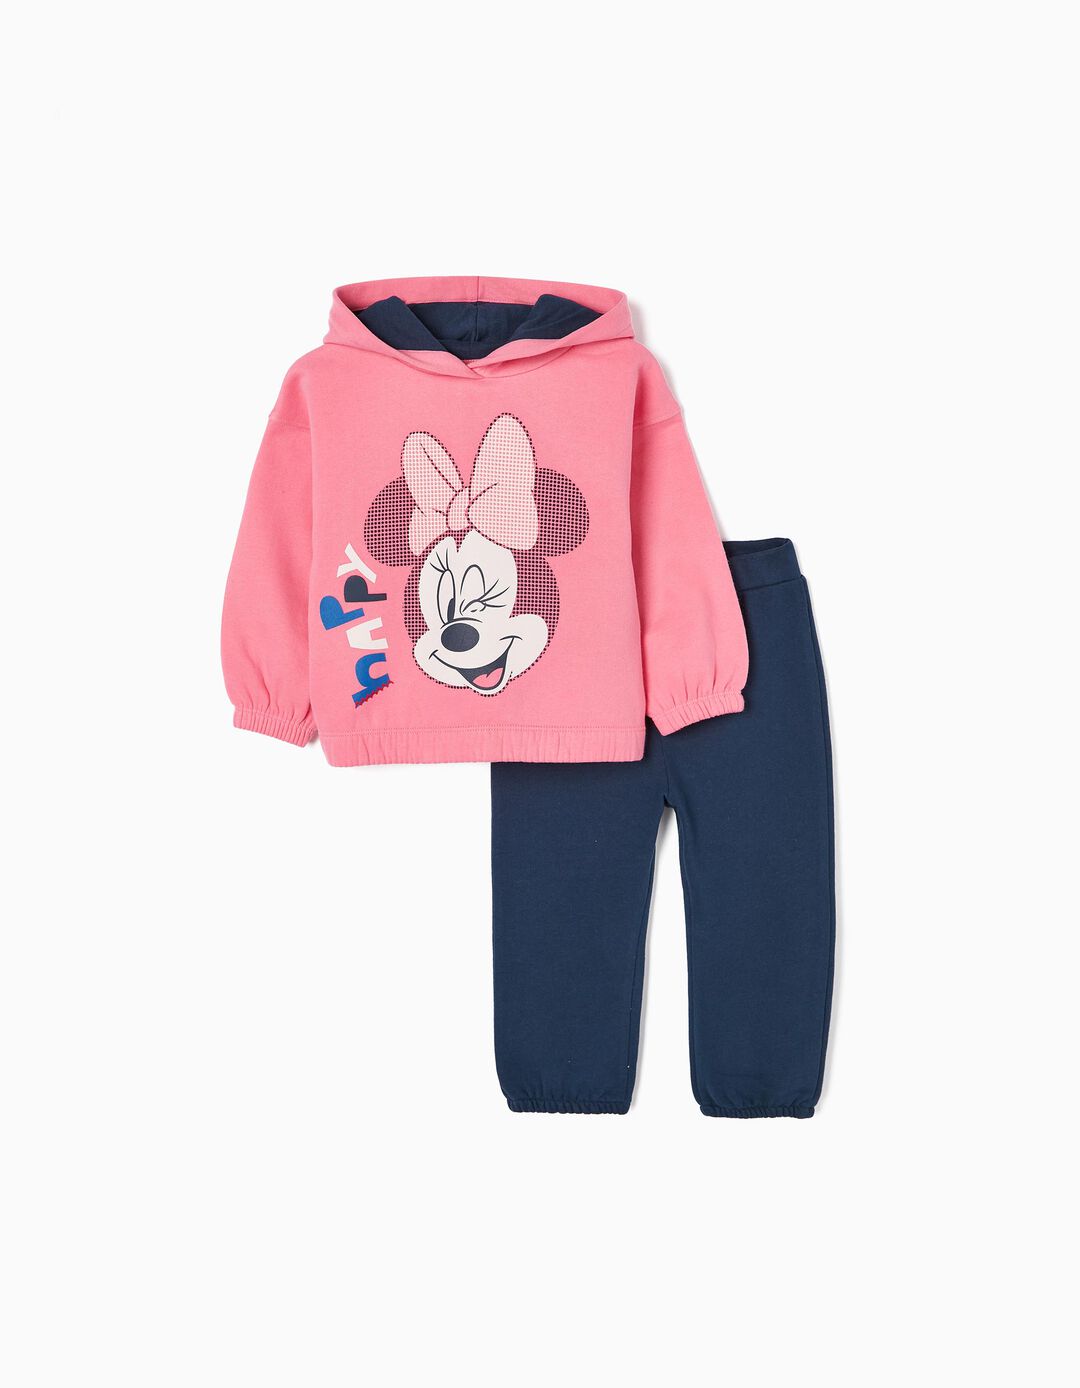 Cotton Tracksuit for Baby Girls 'Minnie', Pink/Dark Blue